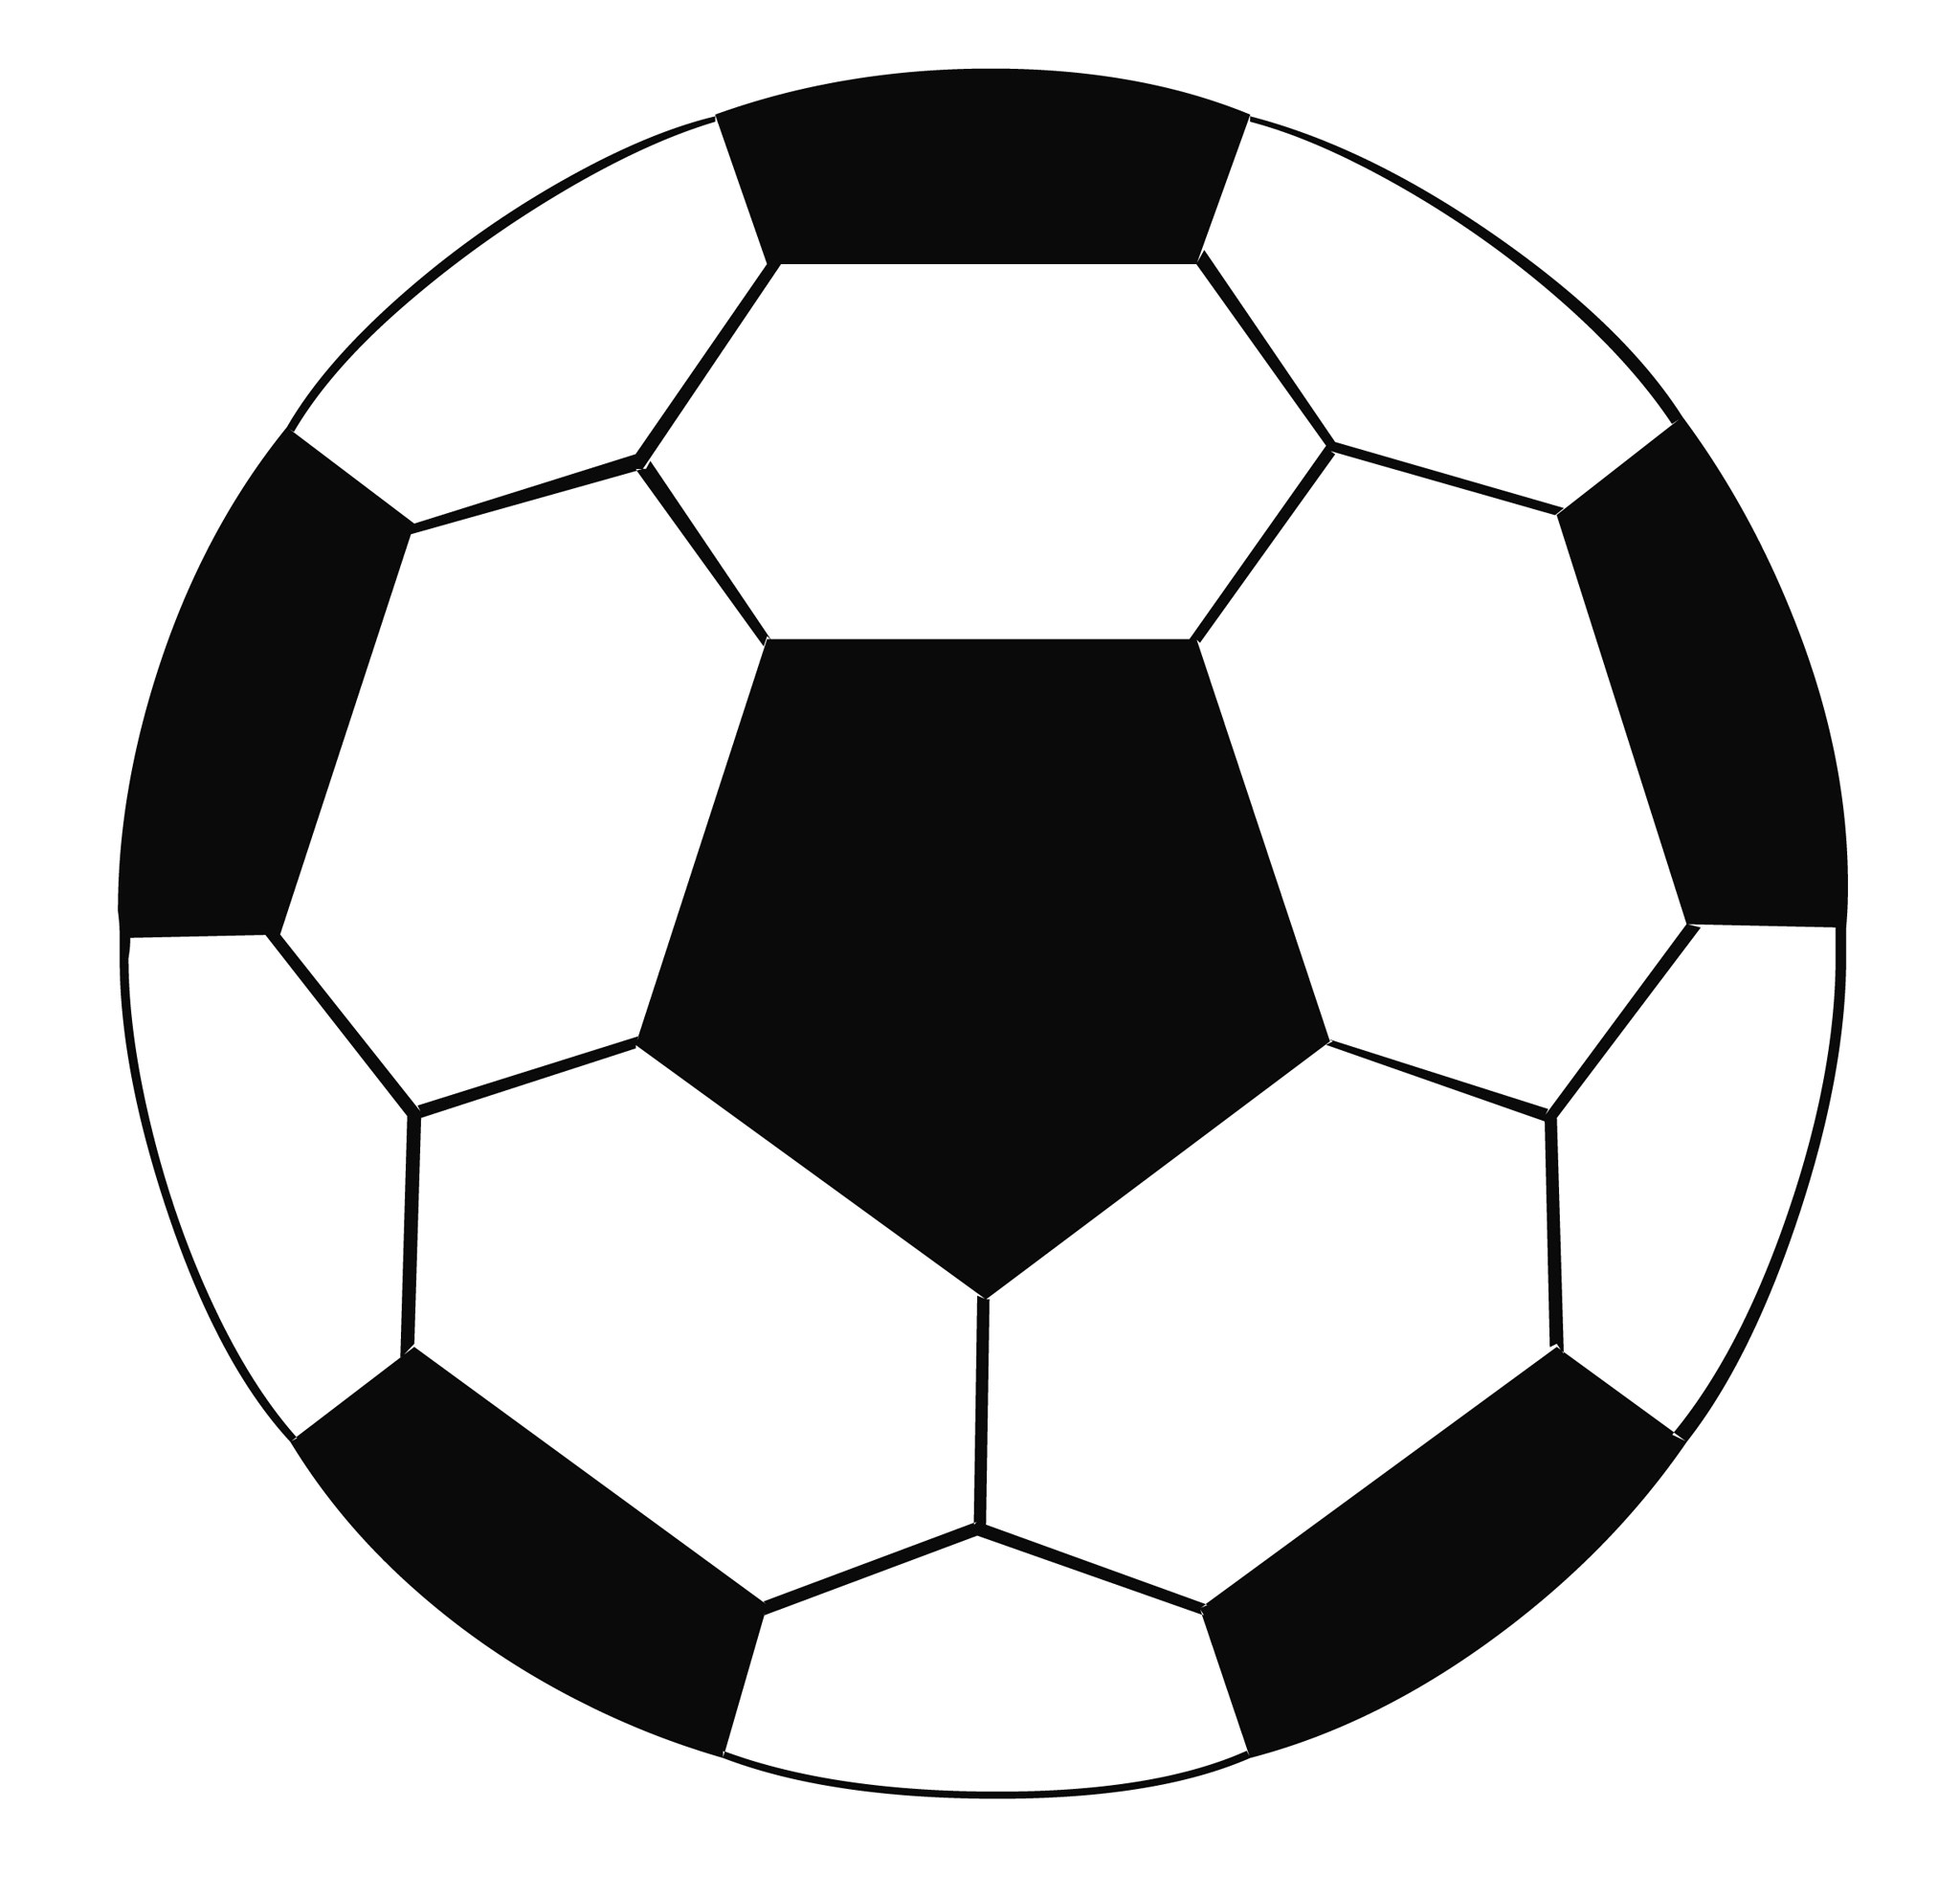 soccerball - DriverLayer Search Engine